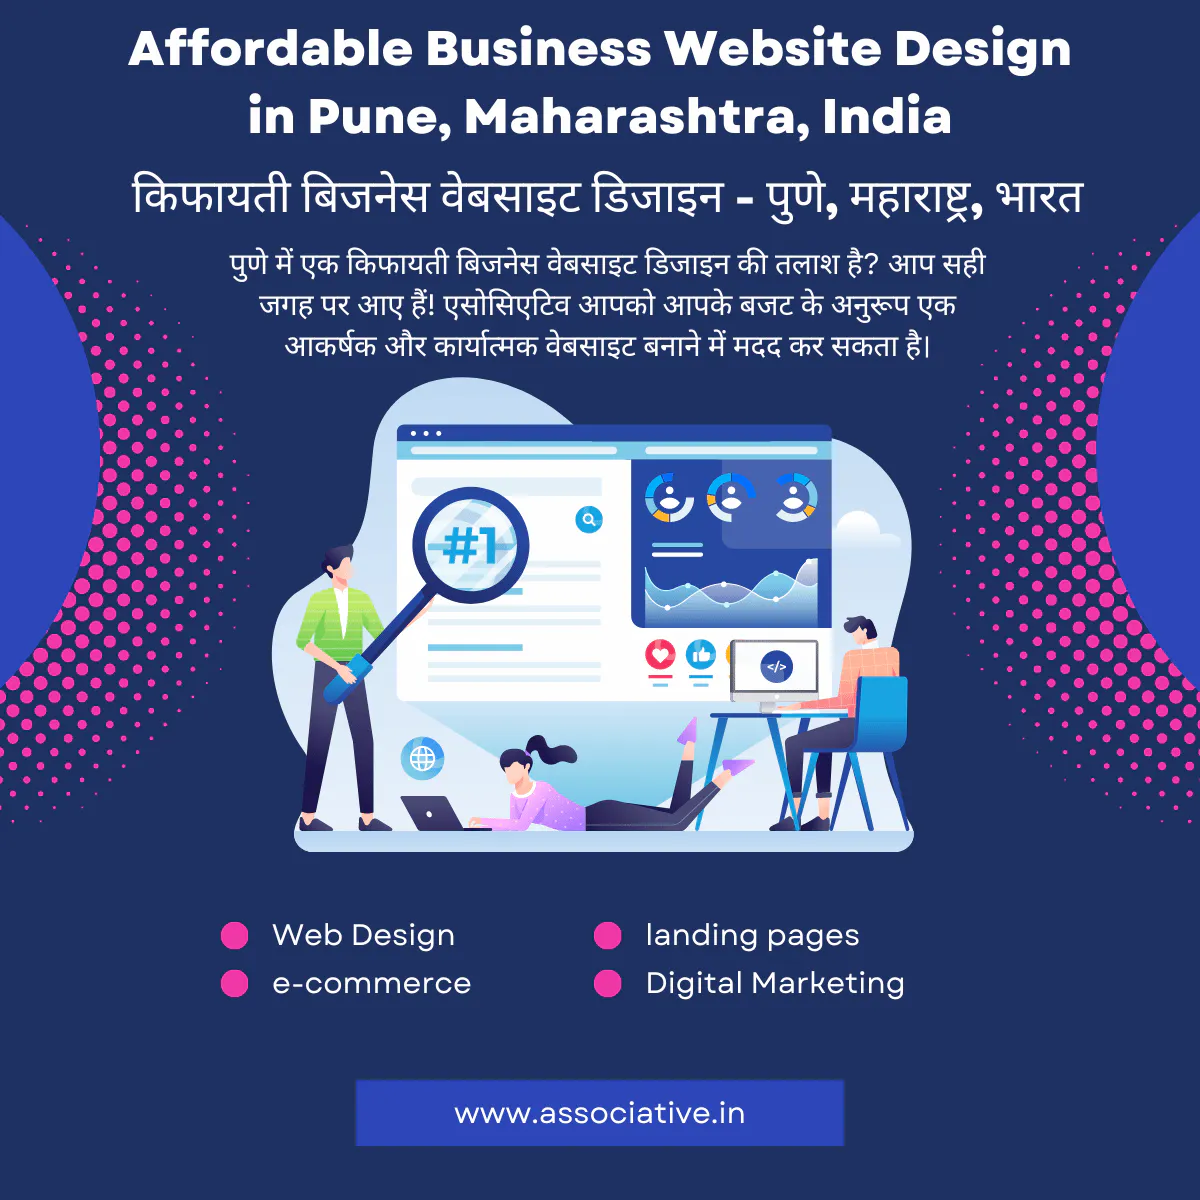 Affordable Business Website Design in Pune, Maharashtra, India